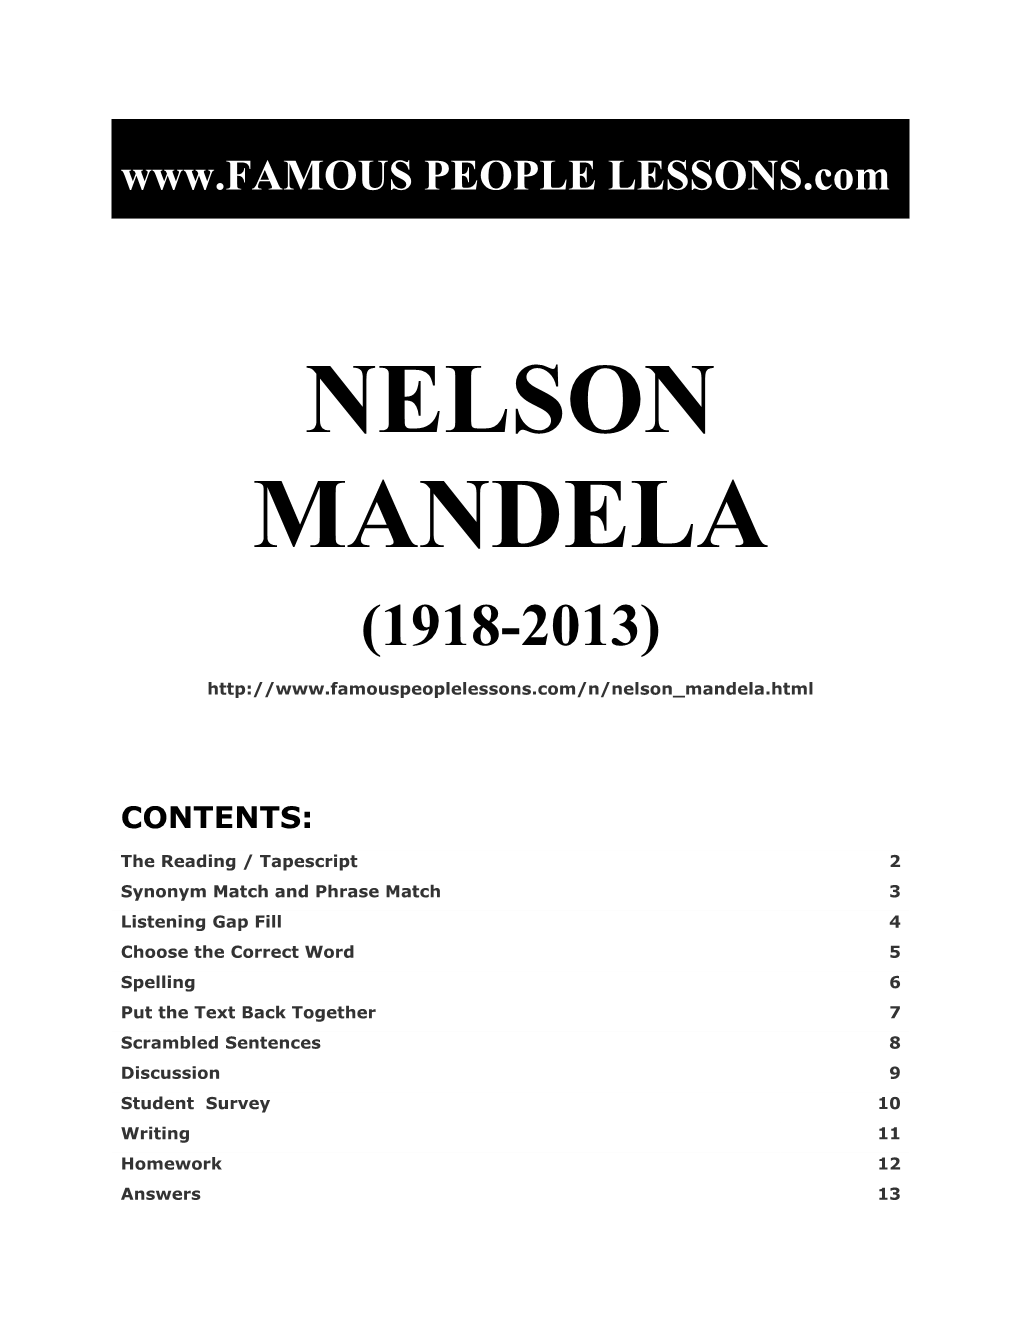 Famous People Lessons - Nelson Mandela